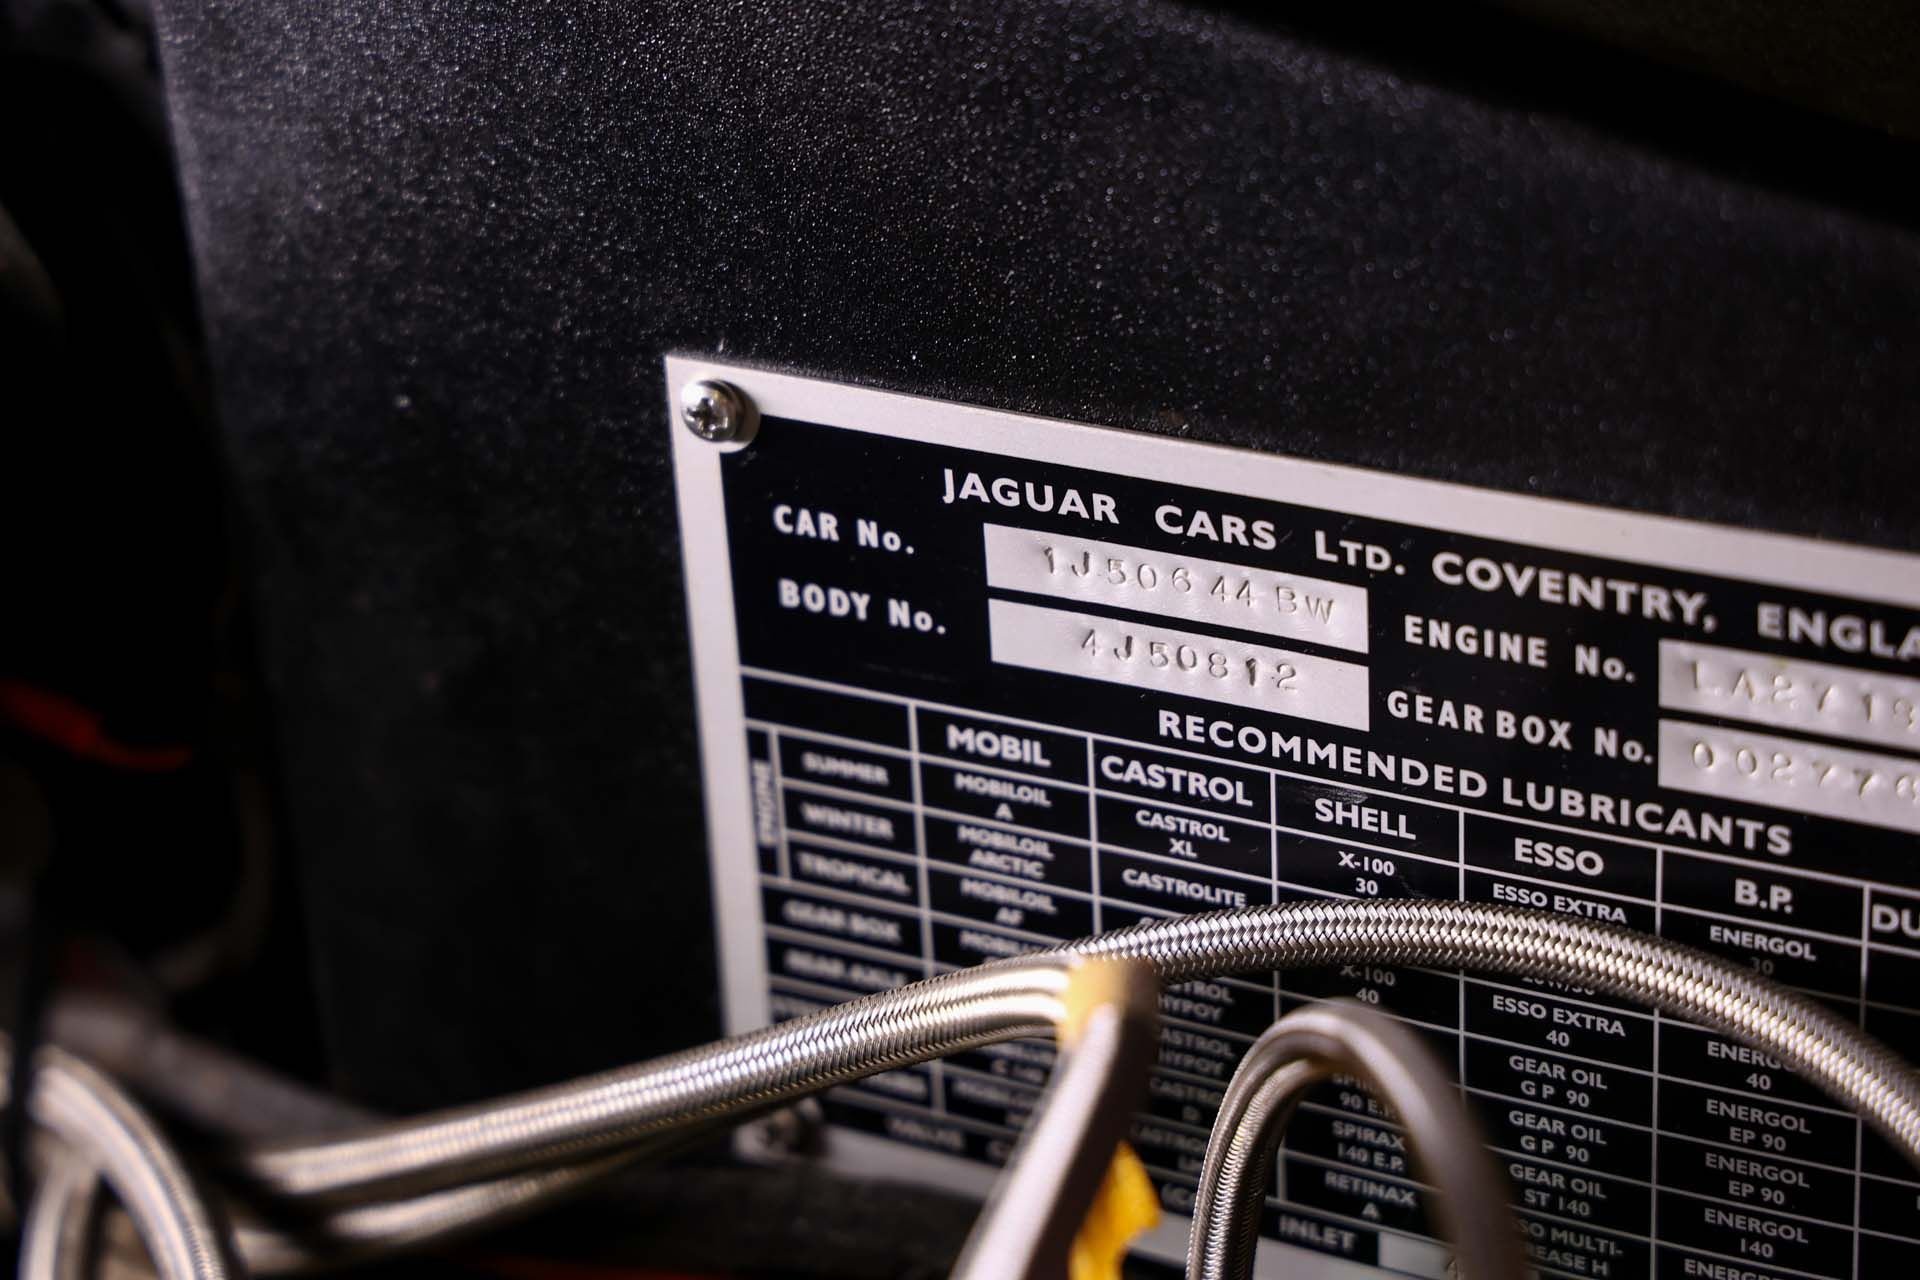 For Sale 1967 Jaguar 340 Rally Car 'New York-to-Paris'